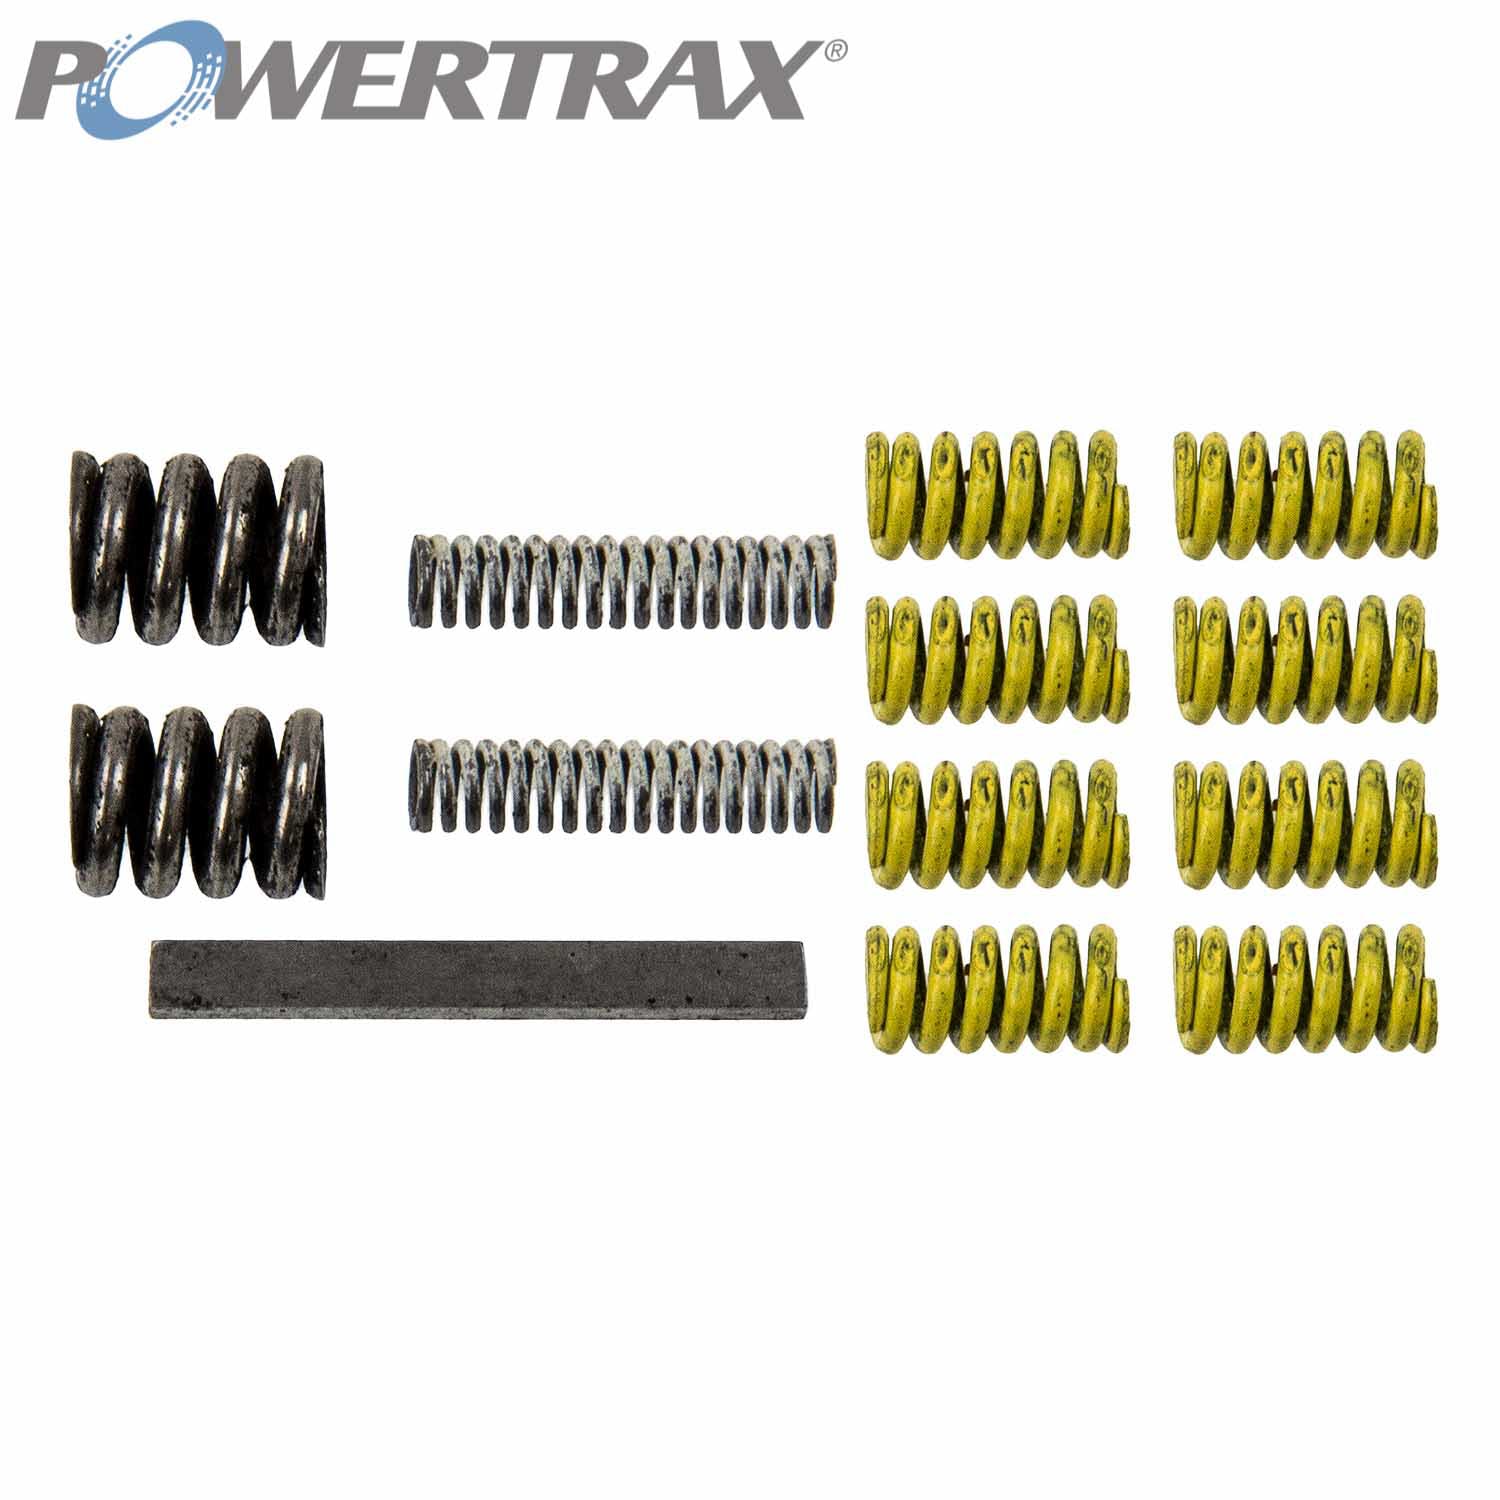 PowerTrax 8001001KAV Spring And Pin Kit